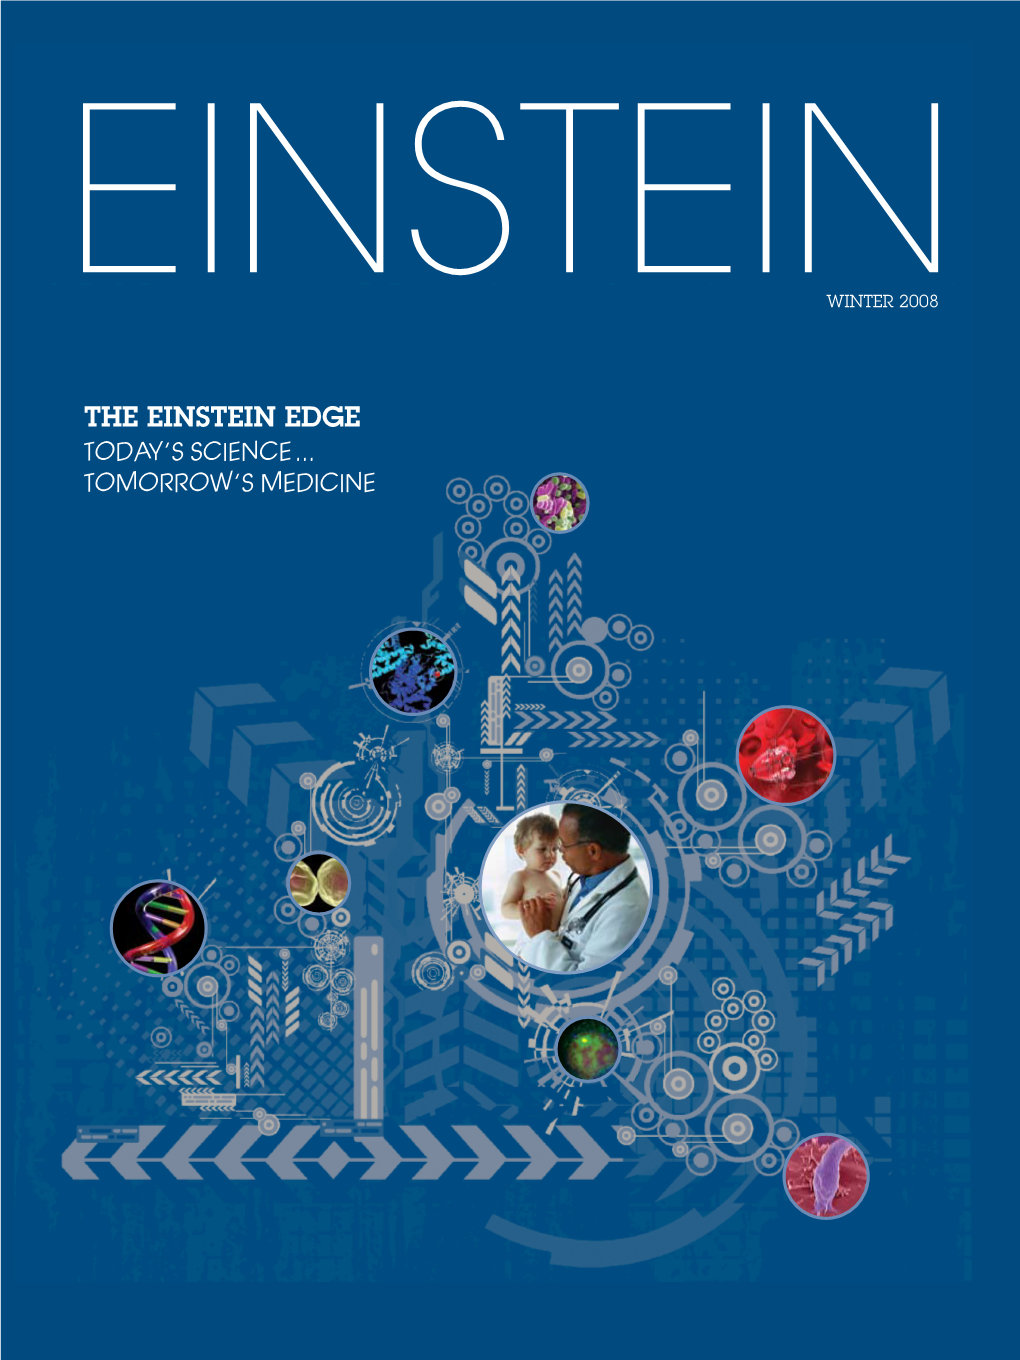 THE Einstein EDGE TODAY’S SCIENCE